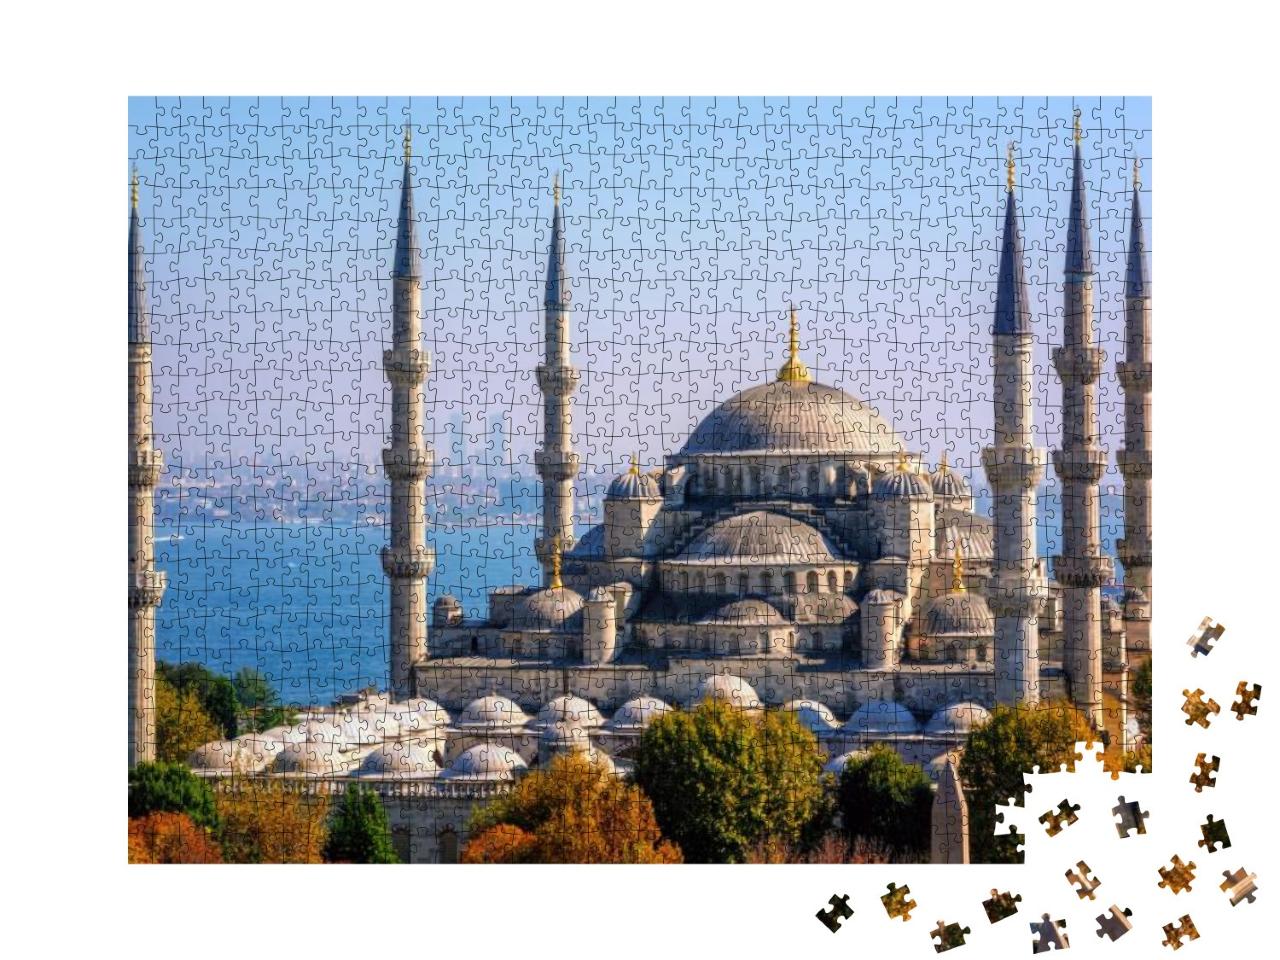 Blue Mosque Sultanahmet Camii, Bosporus & Asian Side Skyl... Jigsaw Puzzle with 1000 pieces